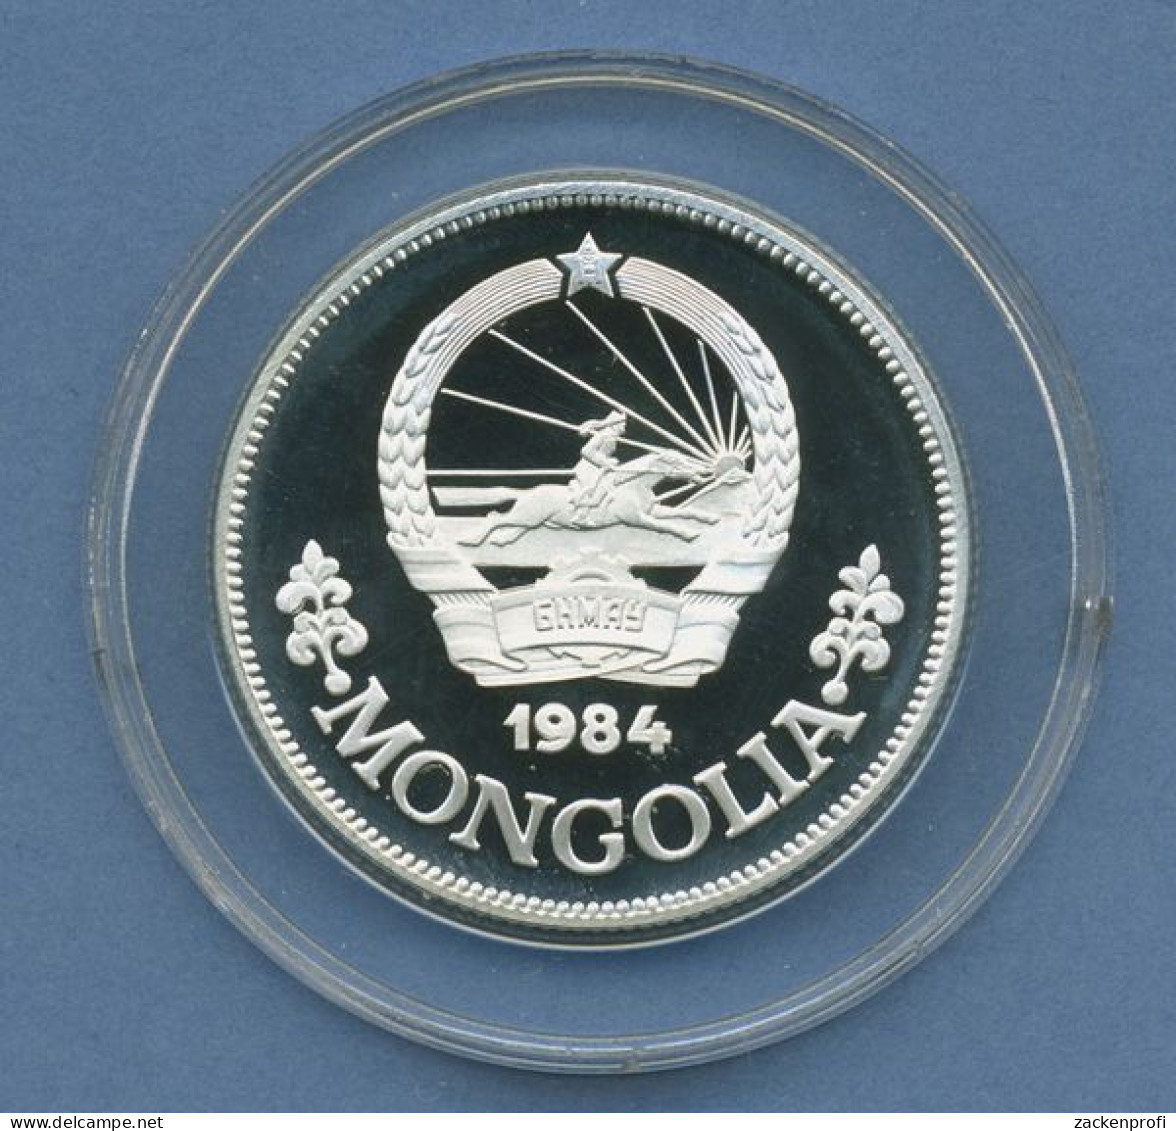 Mongolei 25 Tugrik 1984 Frauendekade Frau, Kind, Silber, KM 47 PP Kapsel (m4379) - Mongolia